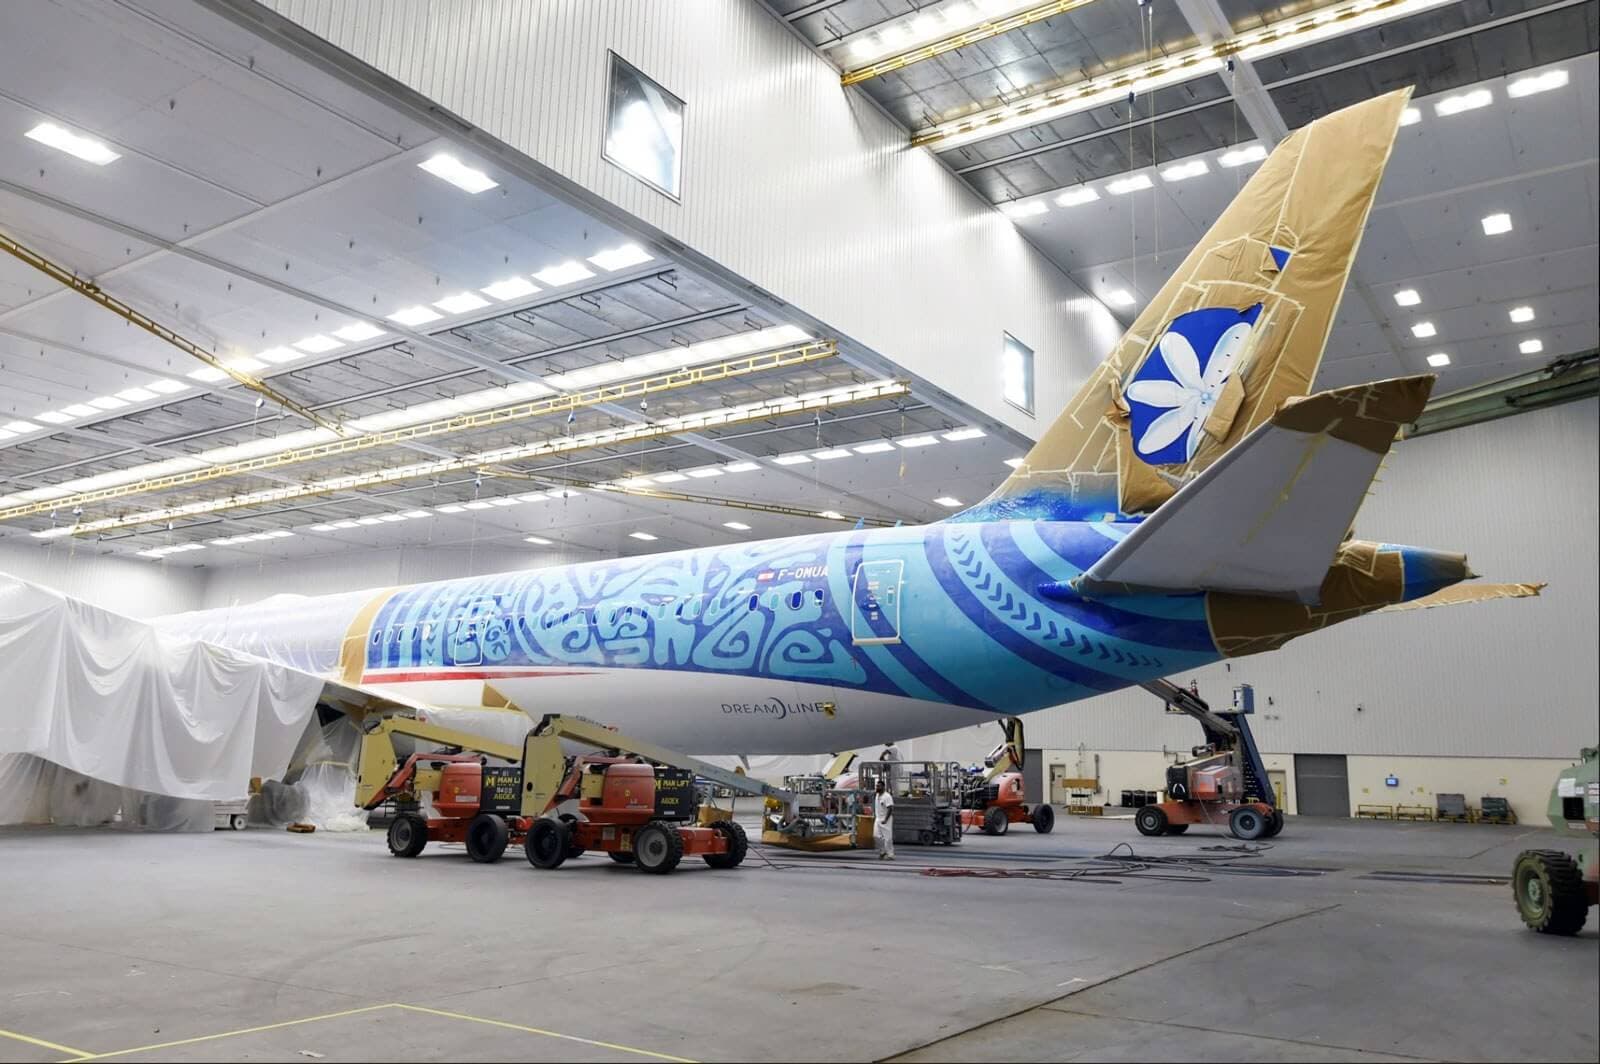 Air Tahiti Nui Livery Paint Hanger